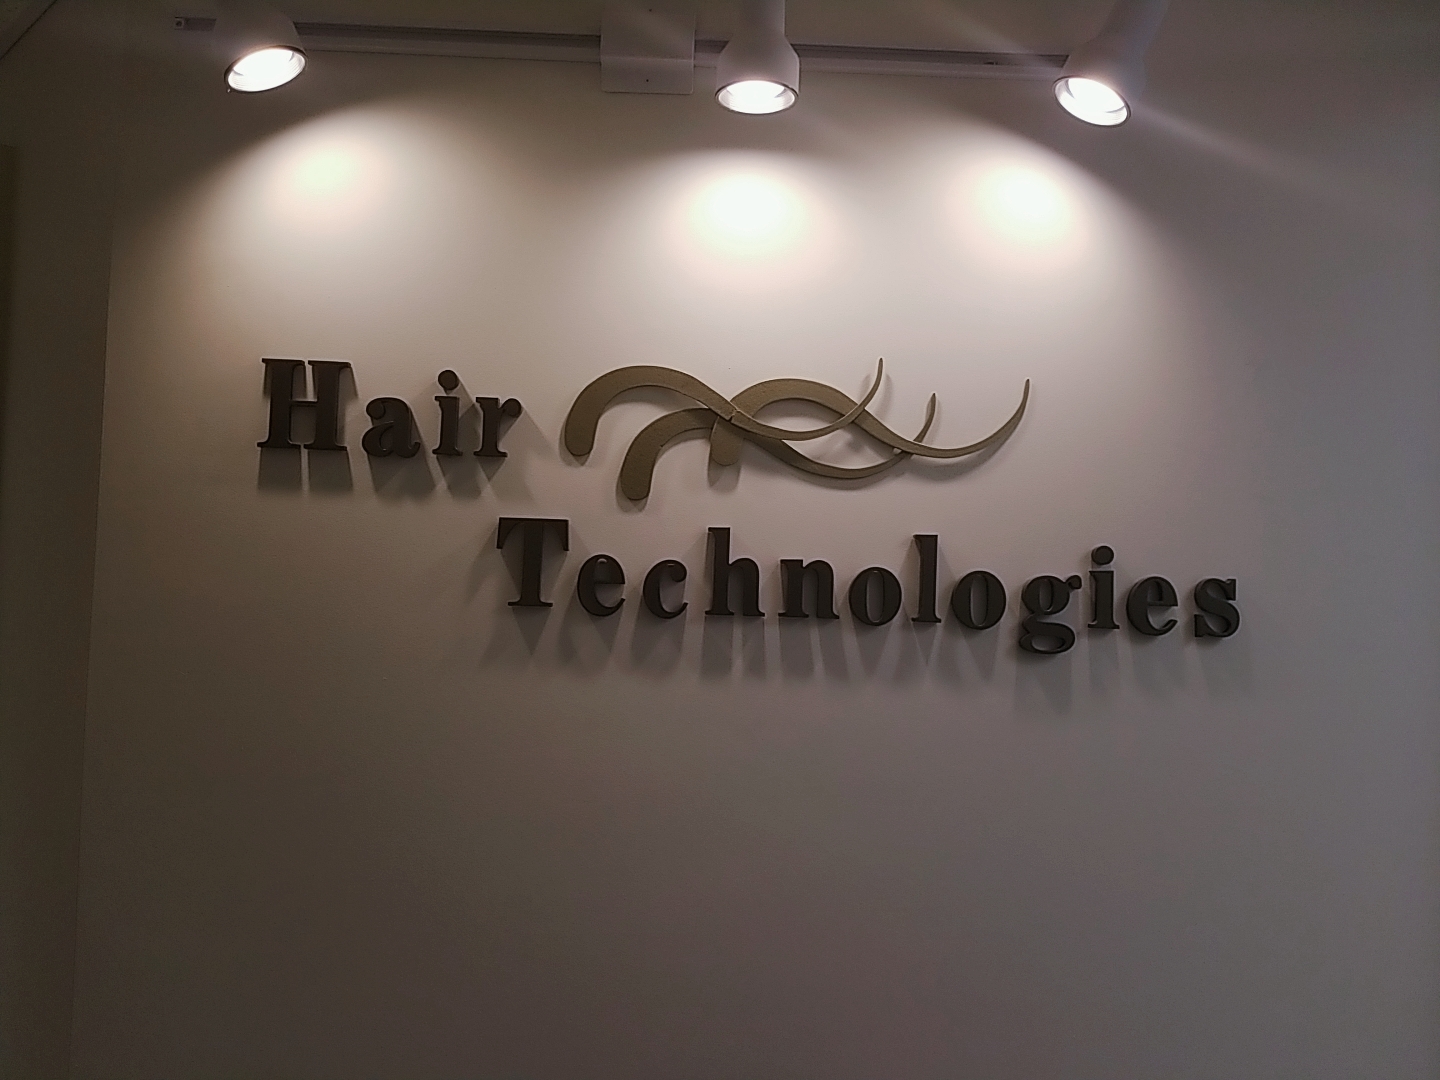 Hair Technologies a Salon for Men and Women